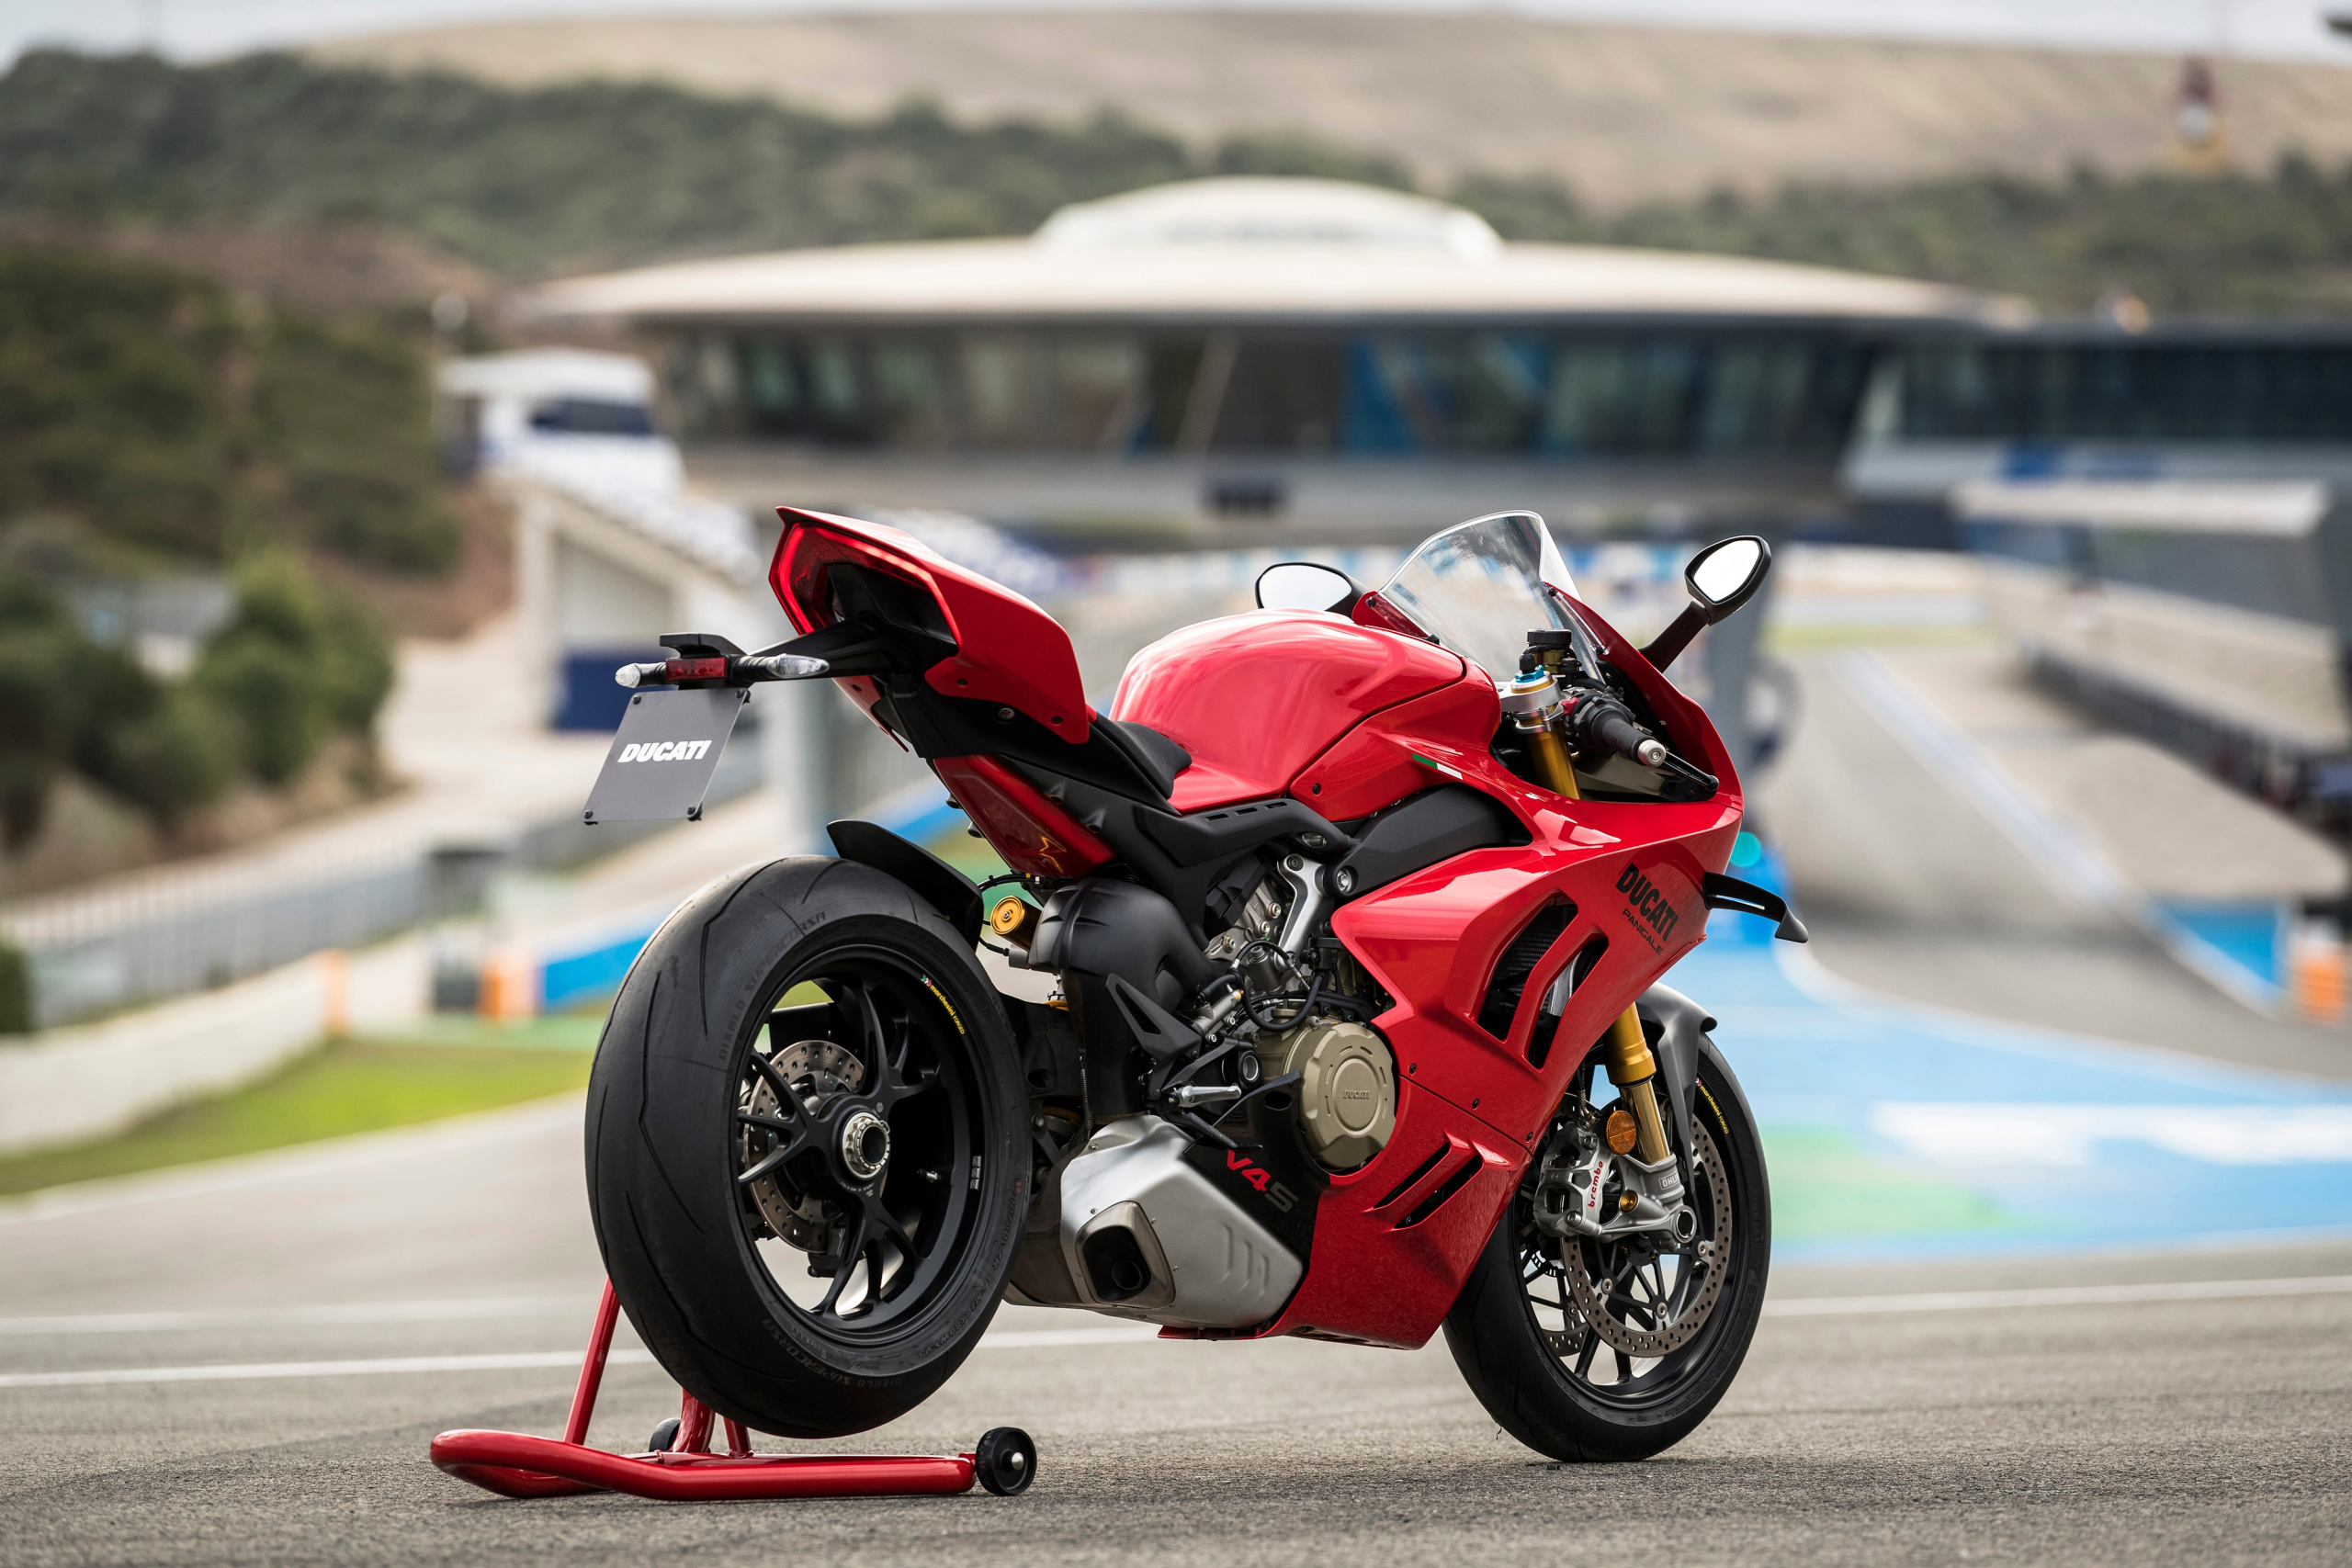 La Ducati Panigale V4 se actualiza con nueva electrónica